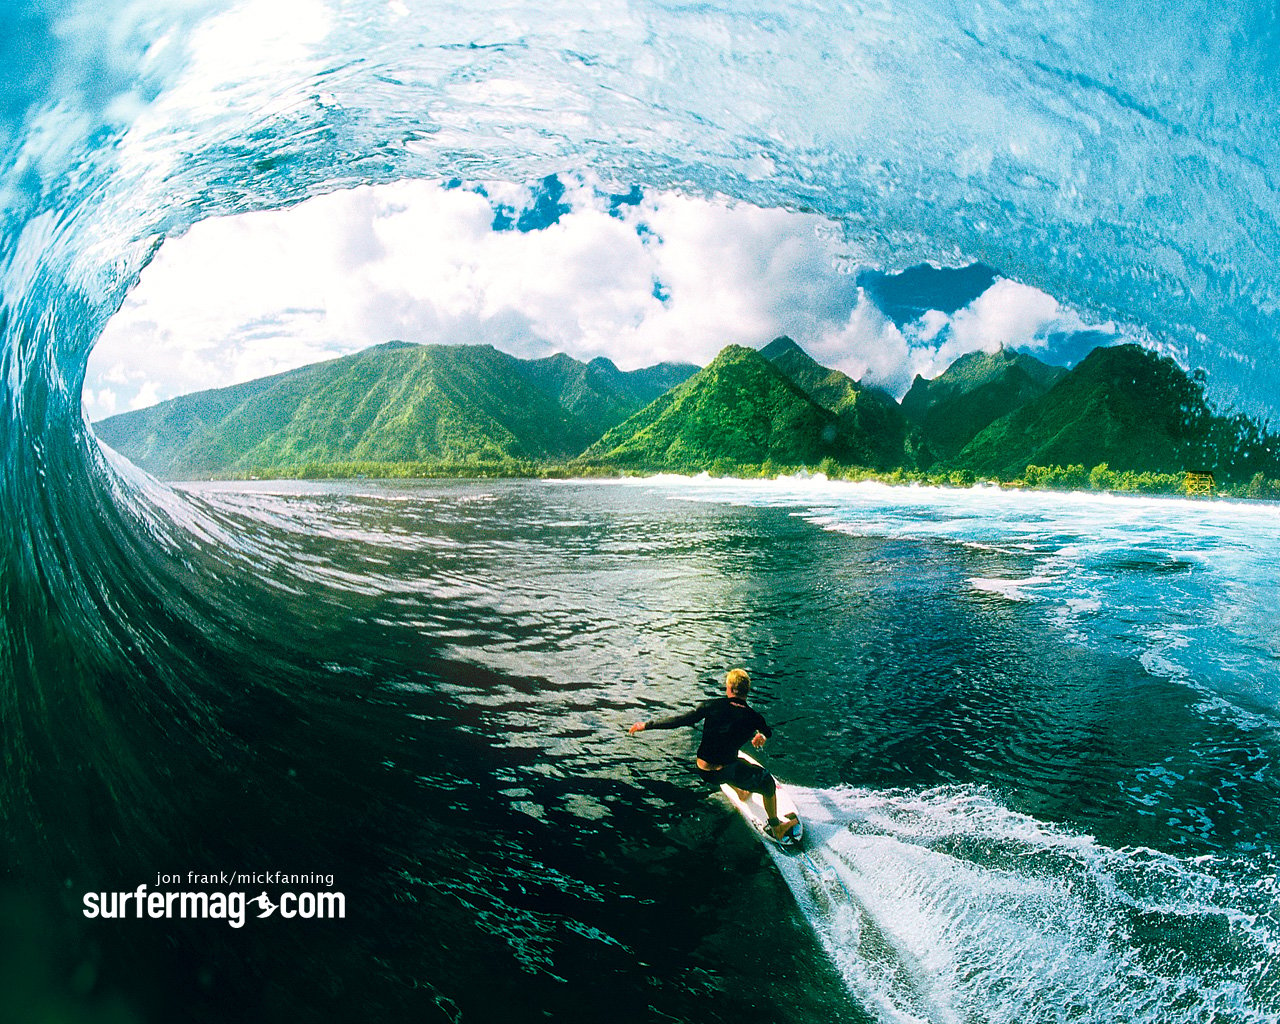 surfing surfingjpg Free Image Hosting at TurboImageHost